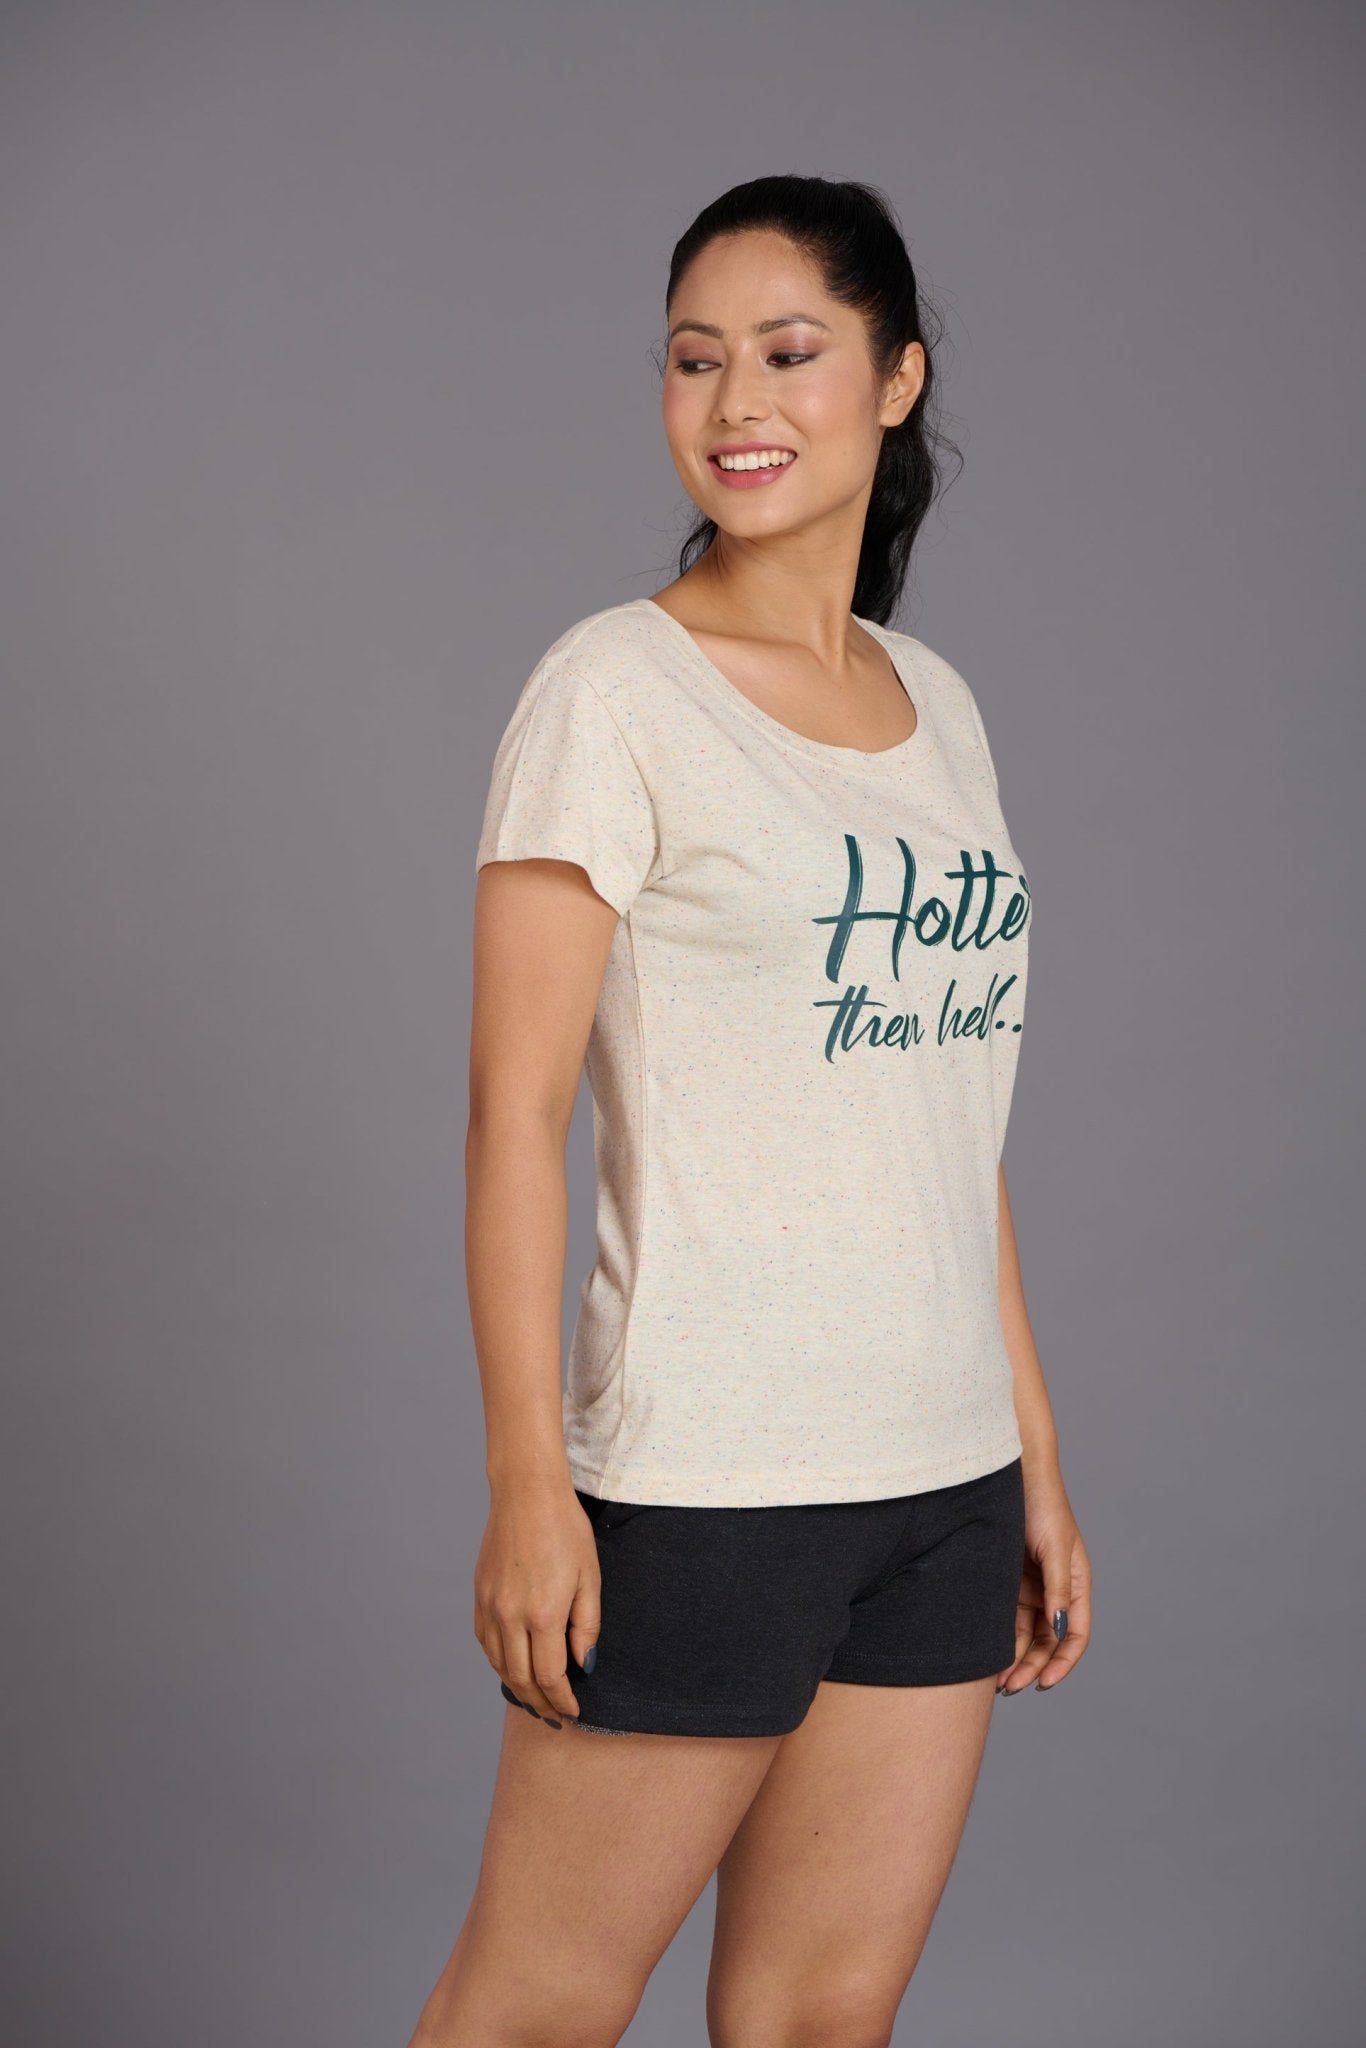 Hotter Than Hell Printed Cream Oversized T-Shirt for Women - Go Devil